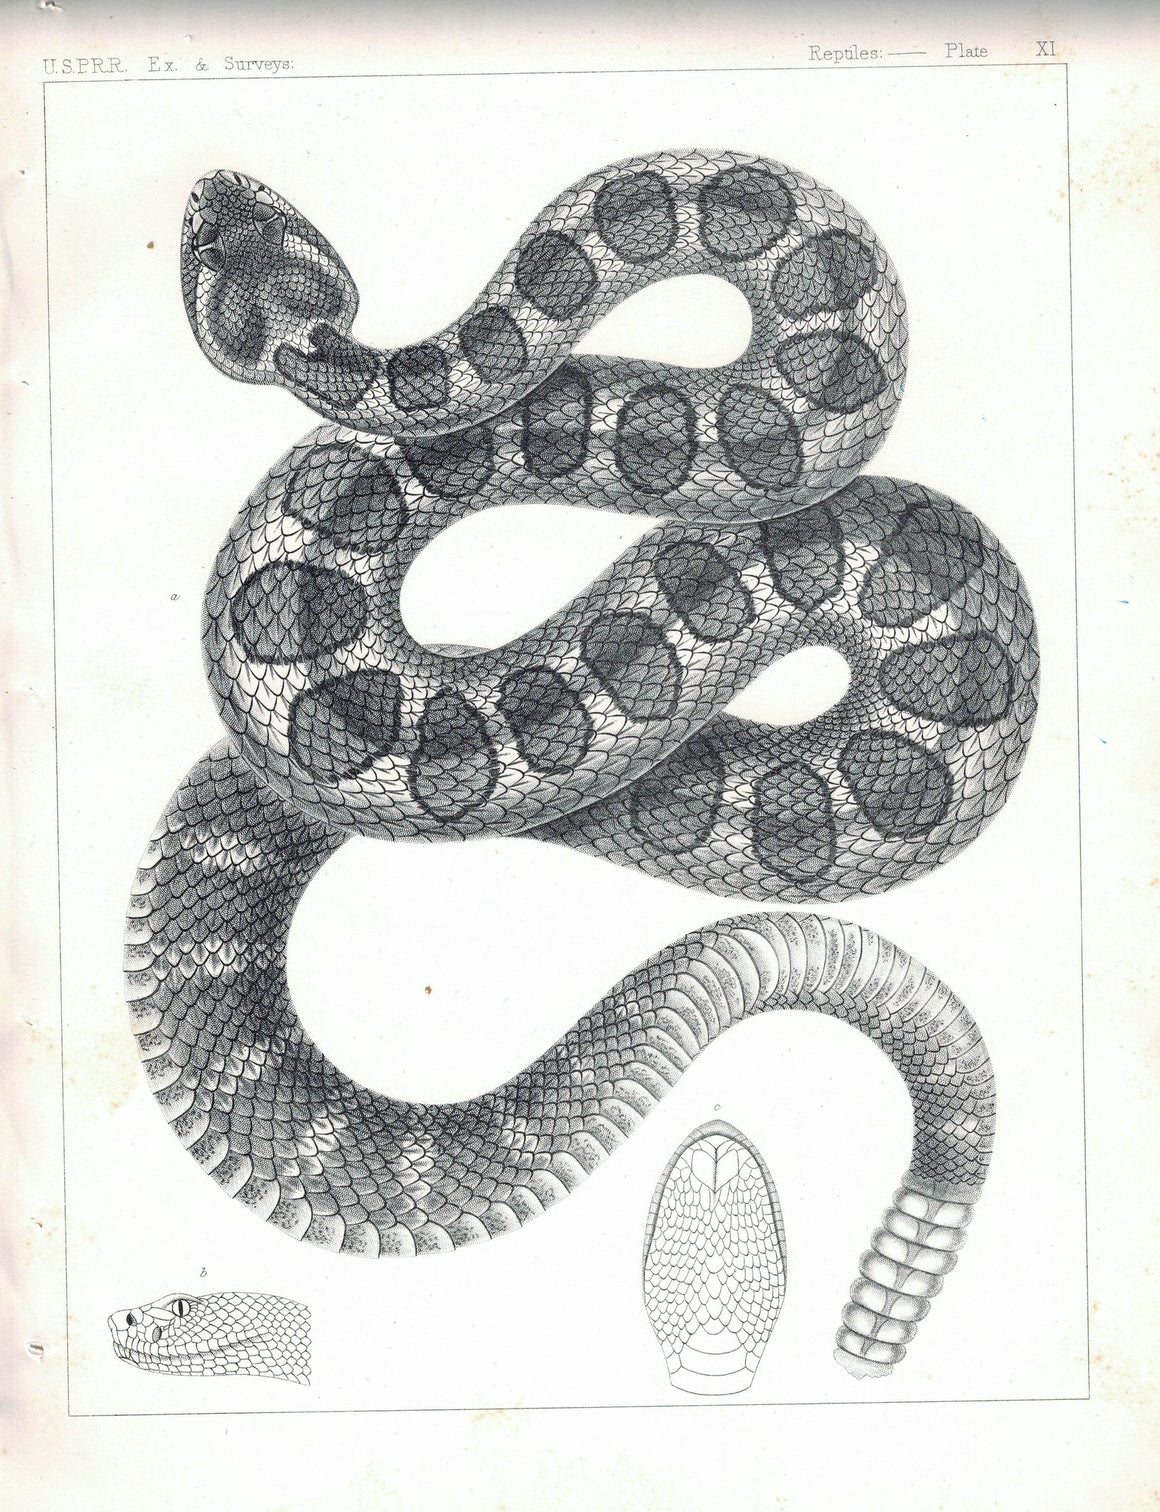 Snake Plate XI 1859 U.S.P.R.R. Lithograph Reptiles Print